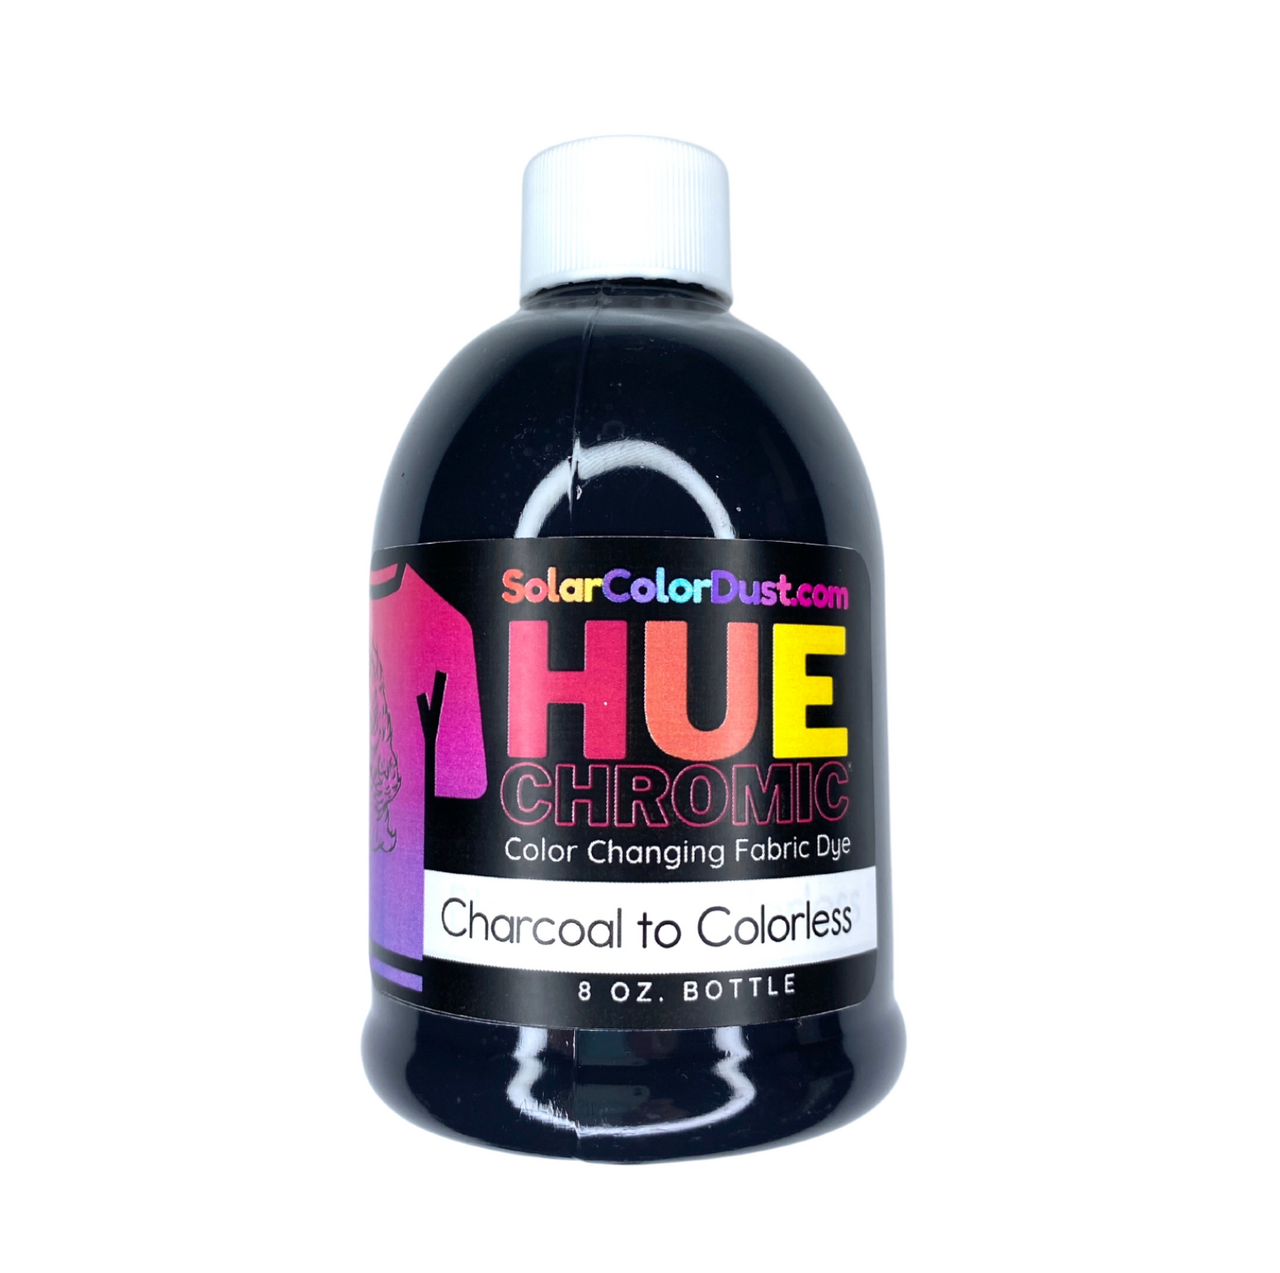 Hue Chromic™ Fabric Dye - Black to Colorless